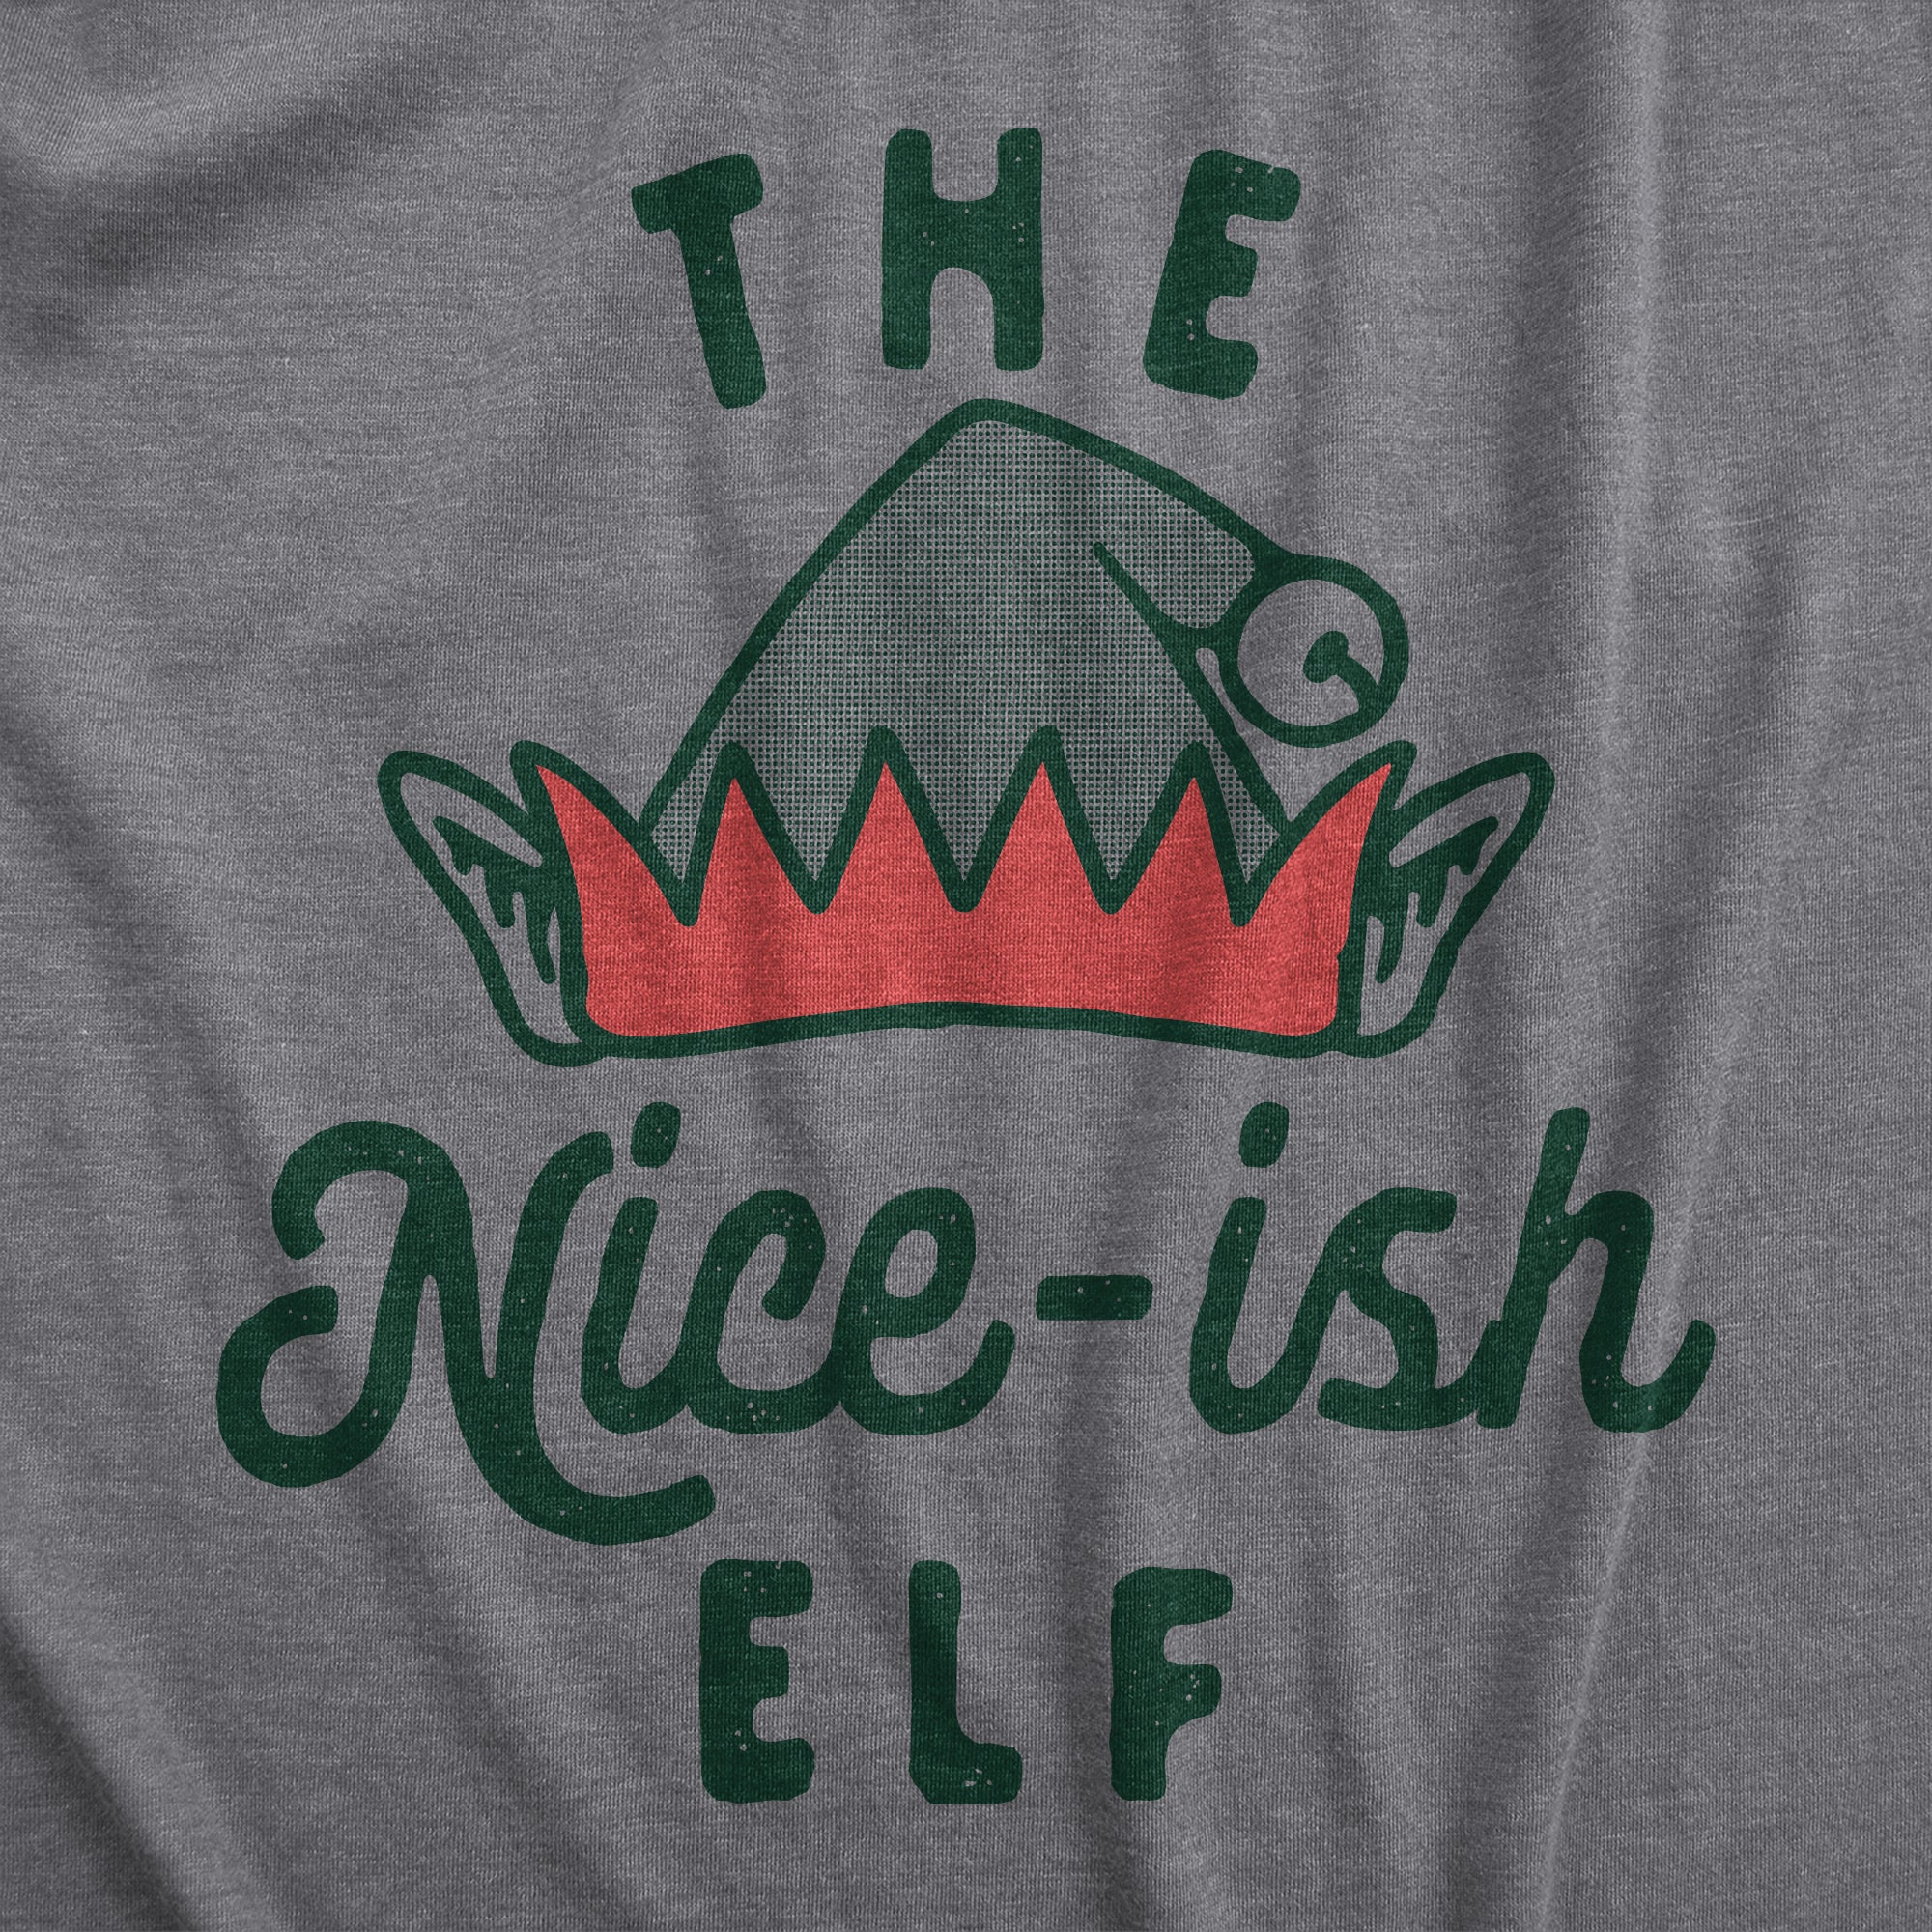 Funny Dark Heather Grey - NICEISH The Nice Ish Elf Womens T Shirt Nerdy Christmas Sarcastic Tee